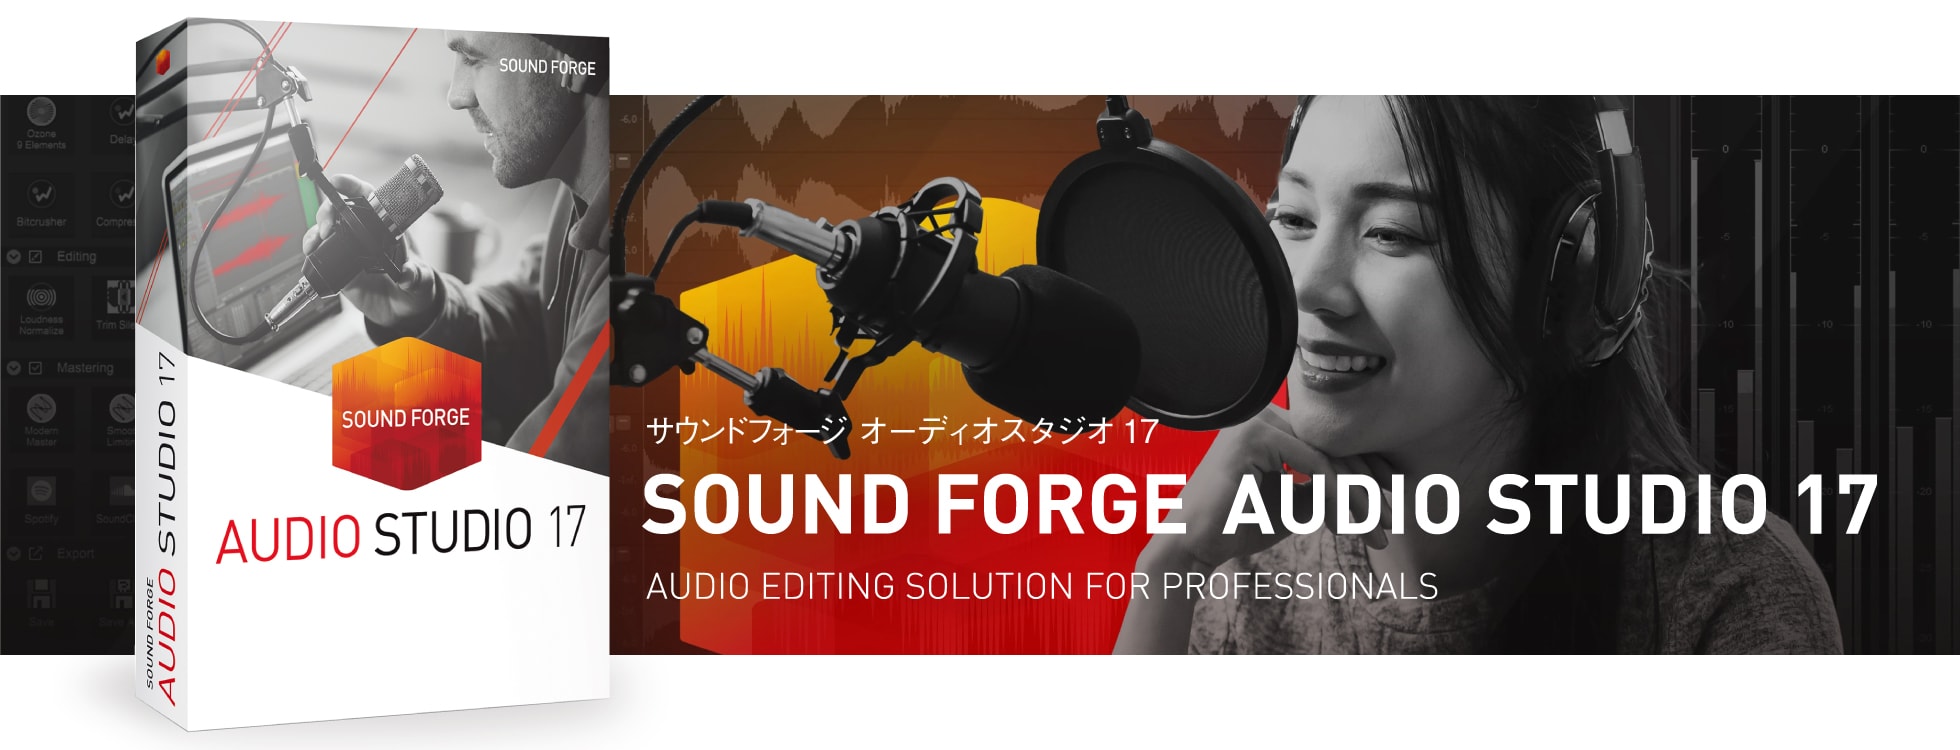 SOUND FORGE Audio Studio 17 - オーディオ編集ソフト